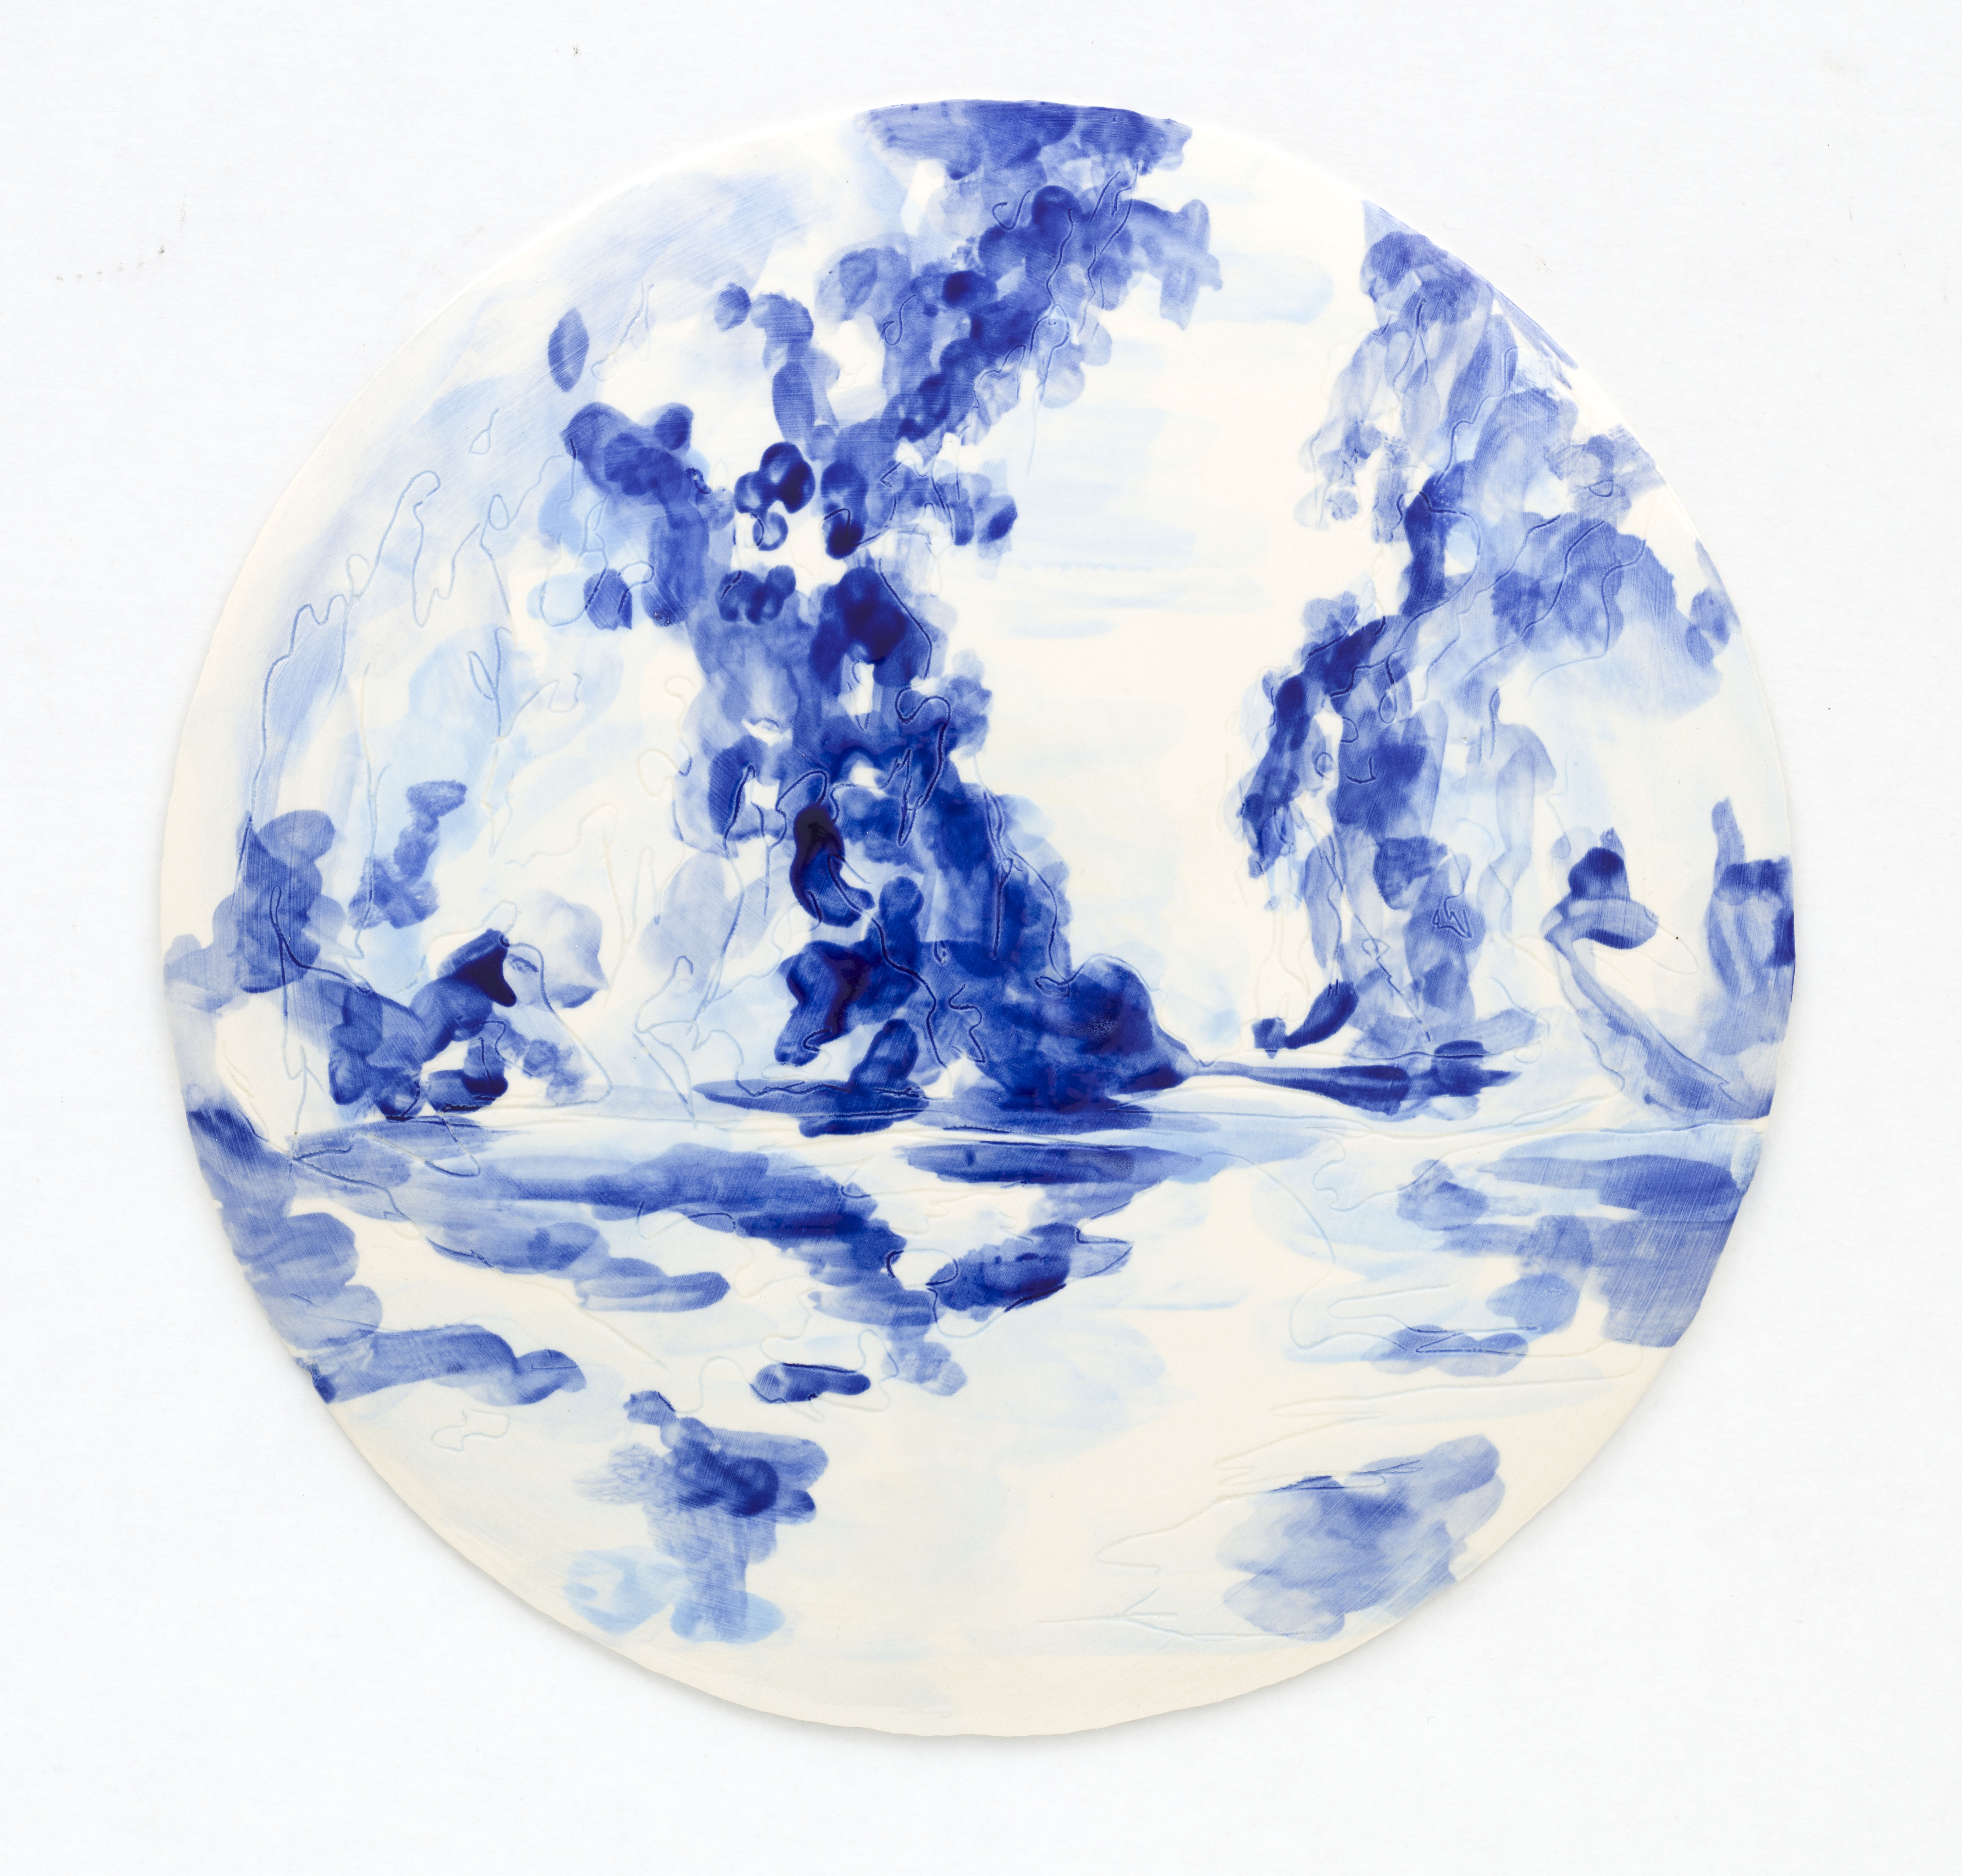 "Azulejo Redondo", painted ceramic tile, 28,5 cm., NL 2012